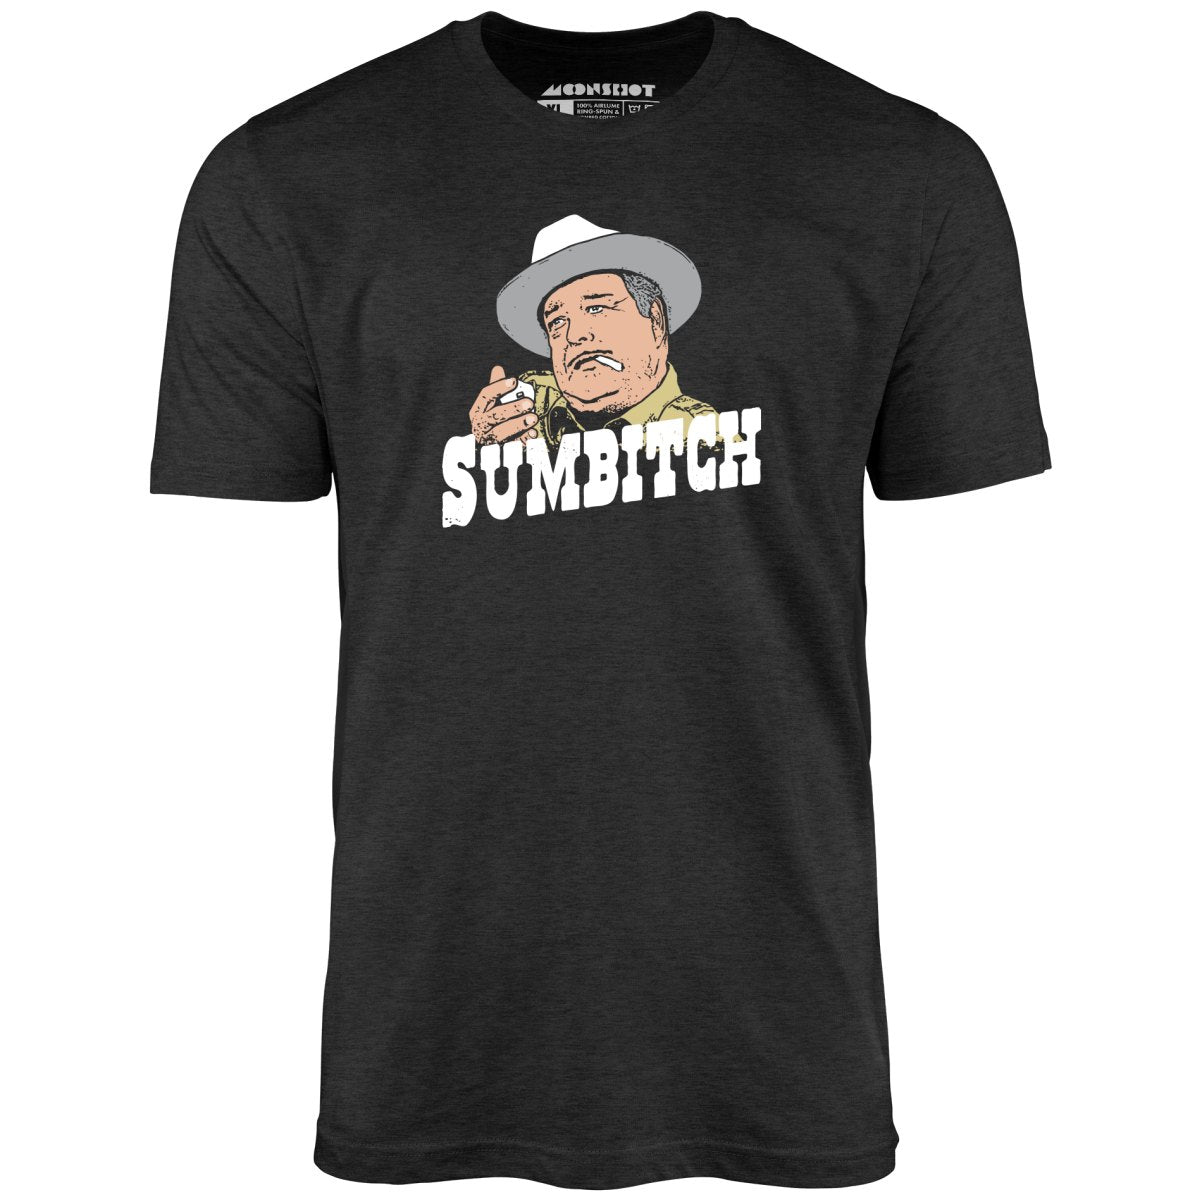 Sumbitch - Unisex T-Shirt